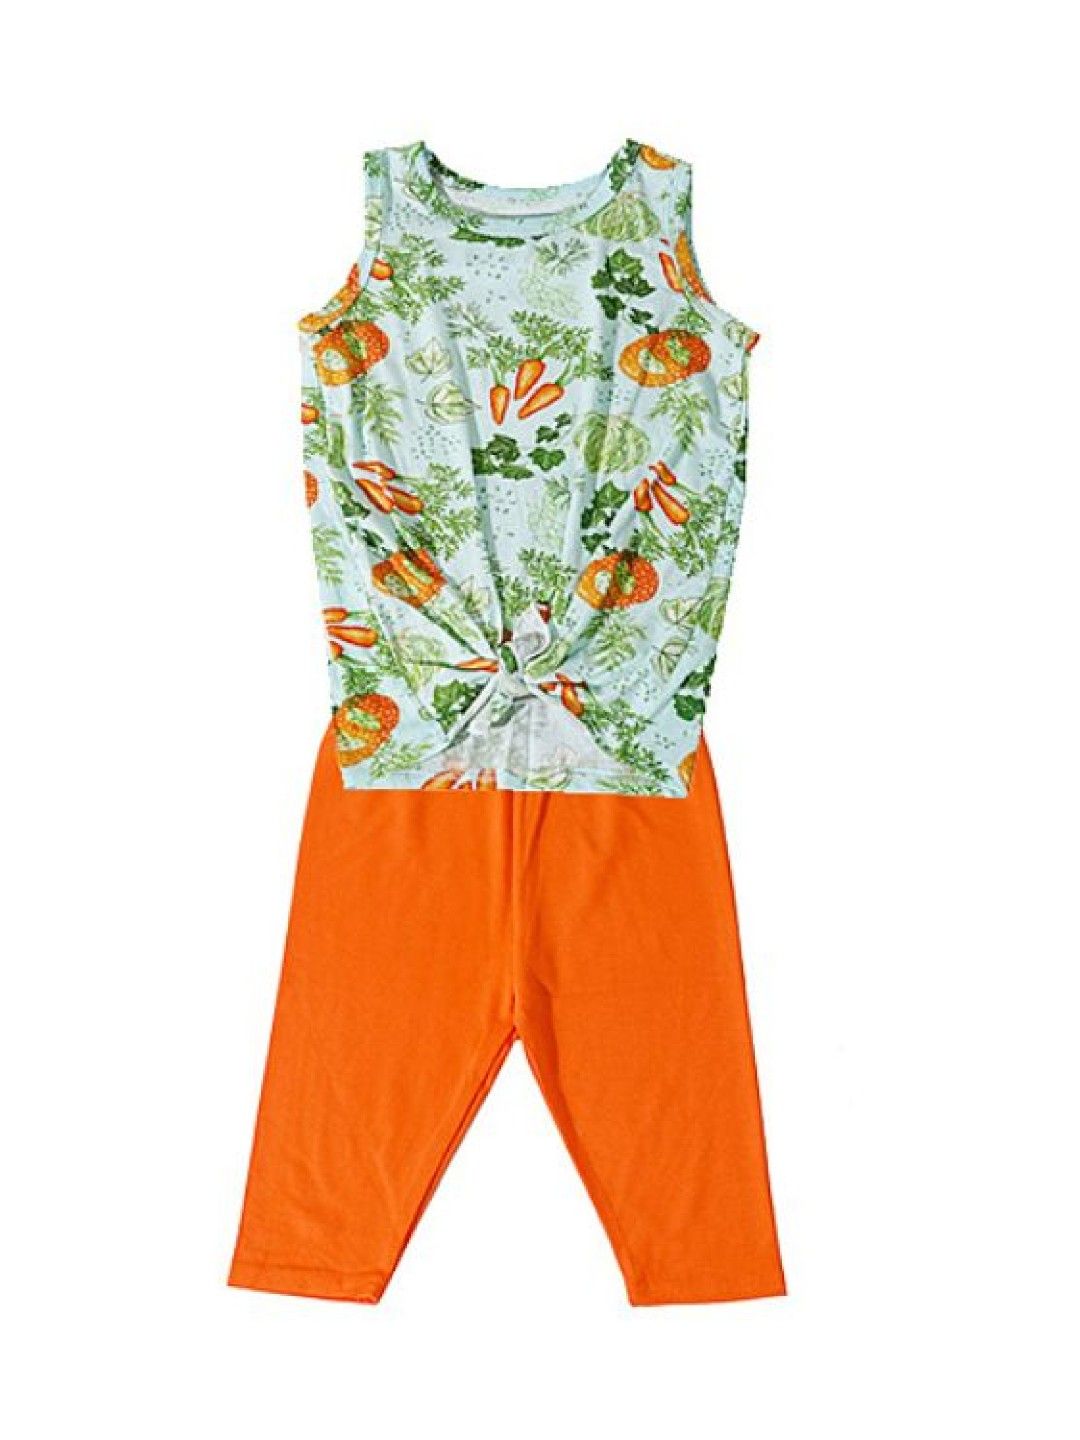 bean fashion Alessa Lanot Playwear Kalabasa Crunch Sleeveless with Plain Capri Leggings (Multicolor- Image 1)